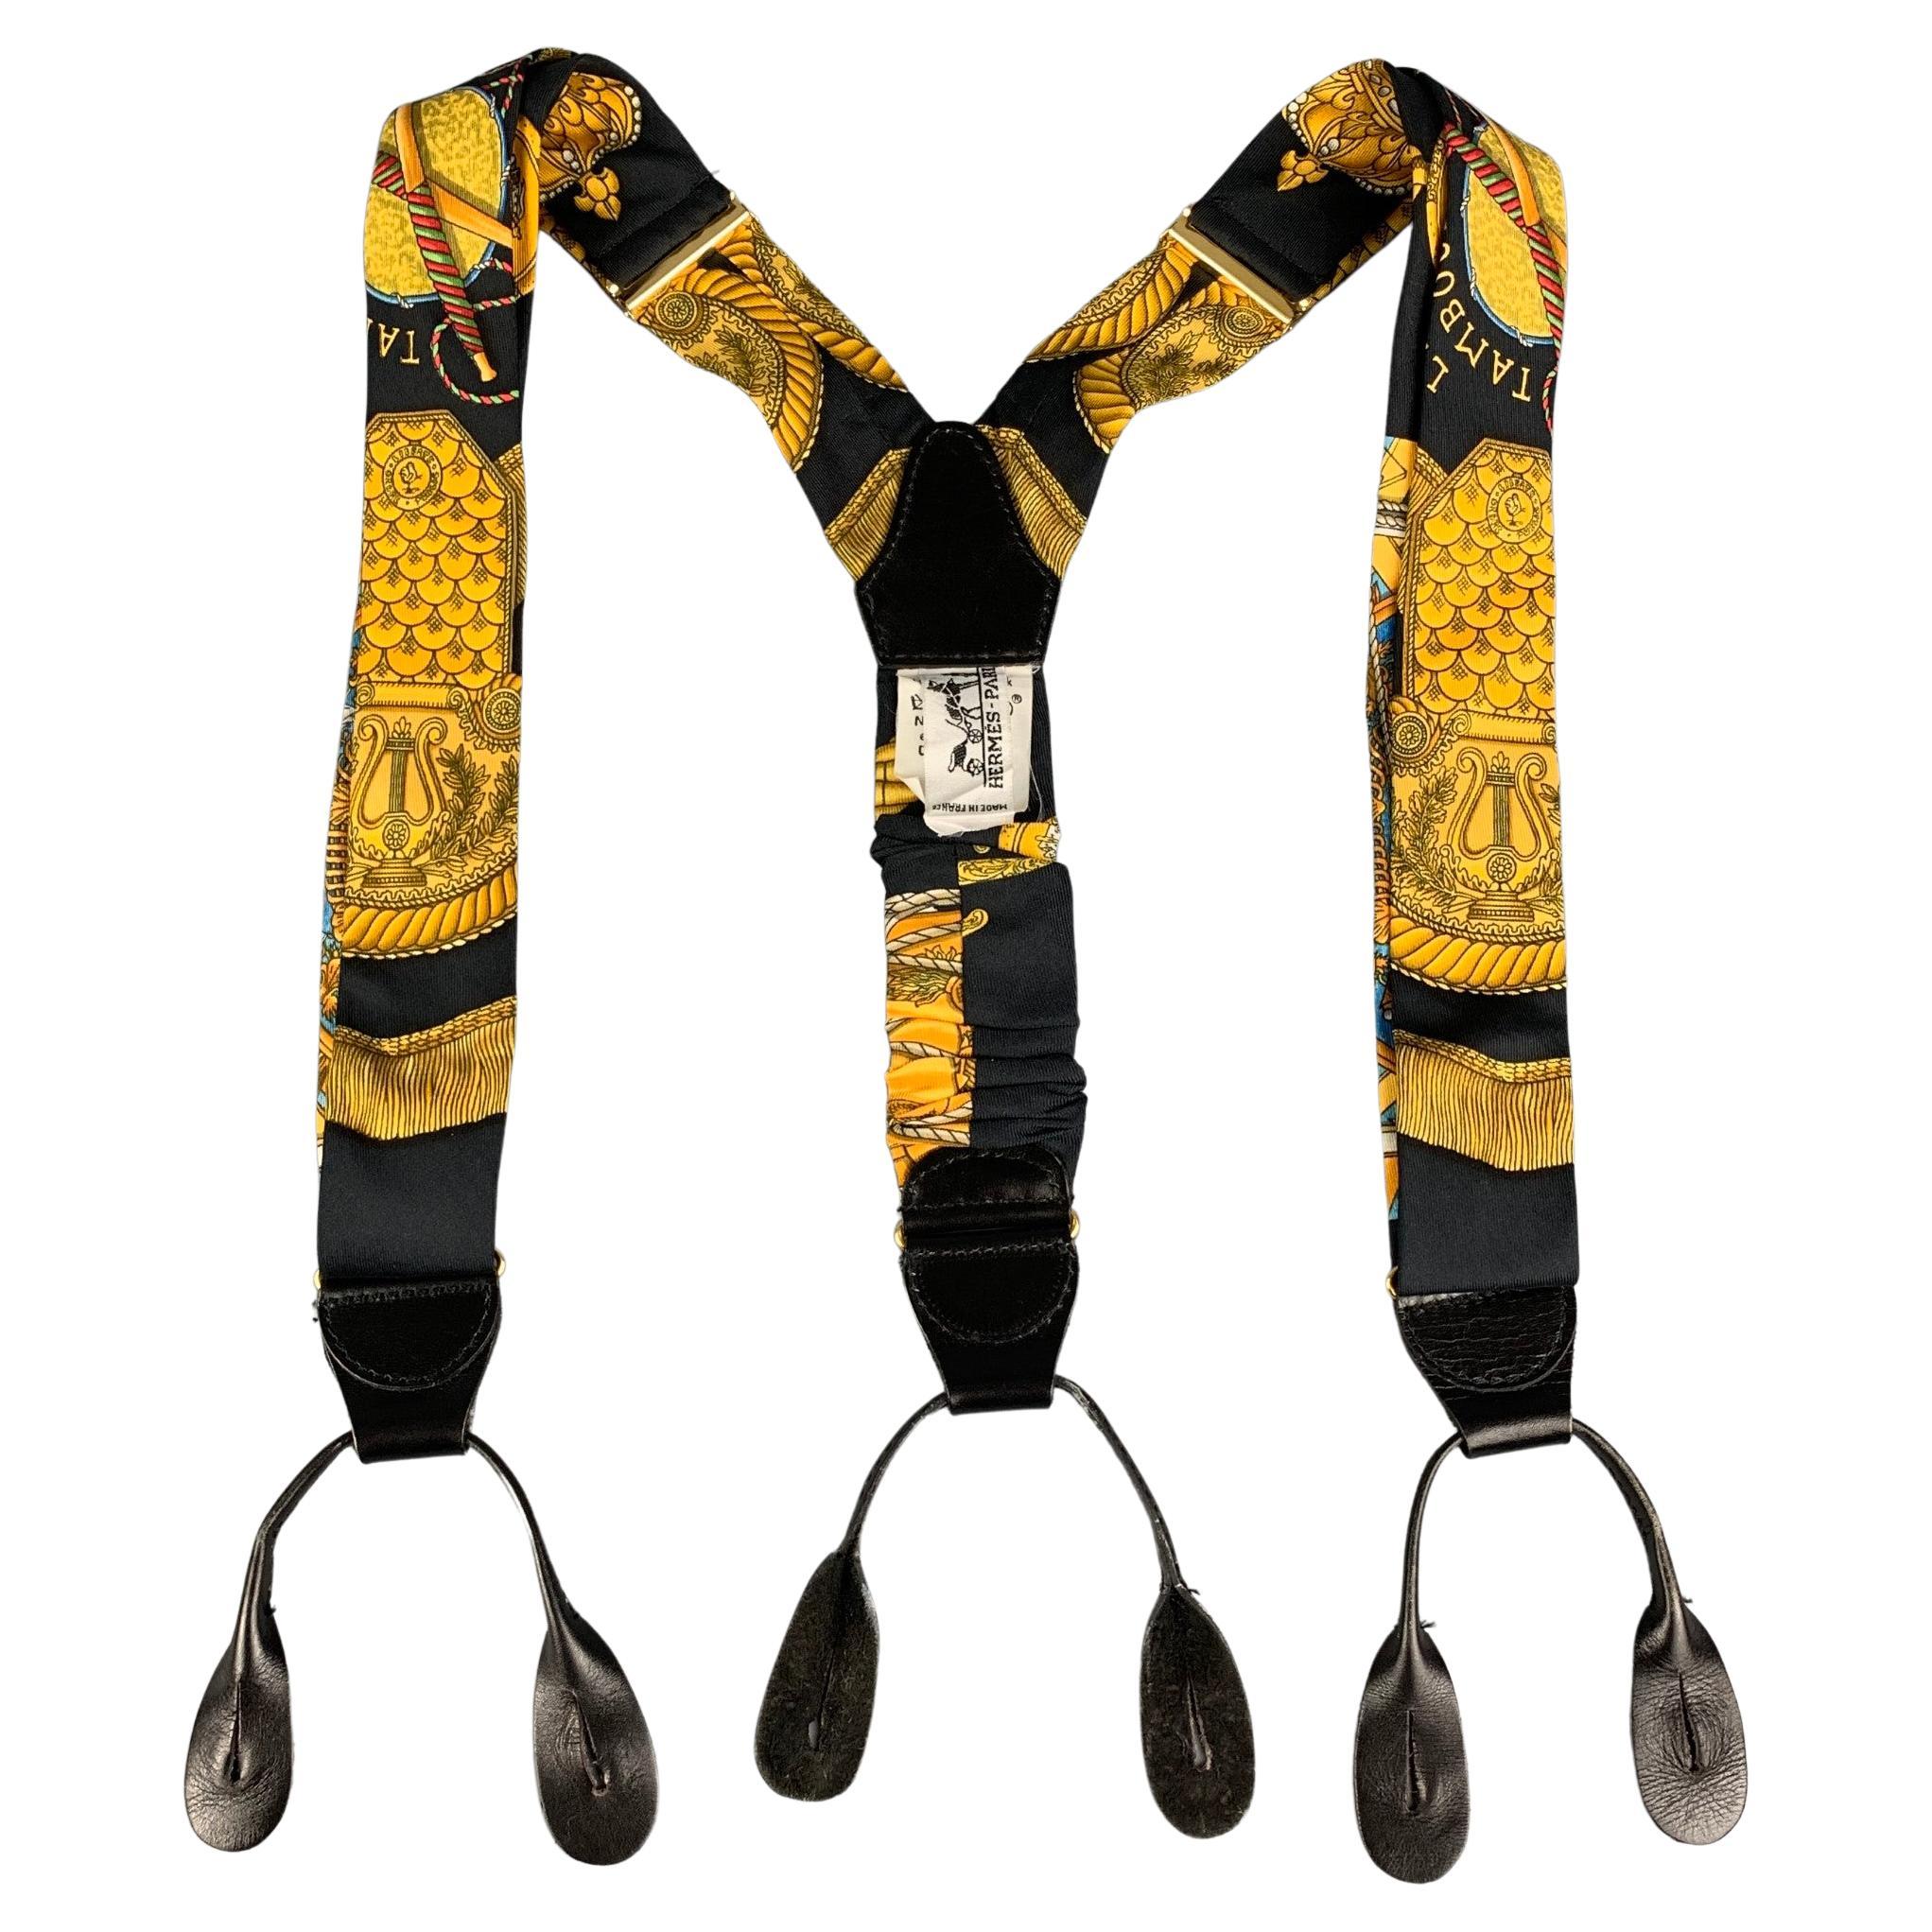 Hermes Suspenders - 2 For Sale on 1stDibs | hermes braces, hermes brackets,  suspenders for sale